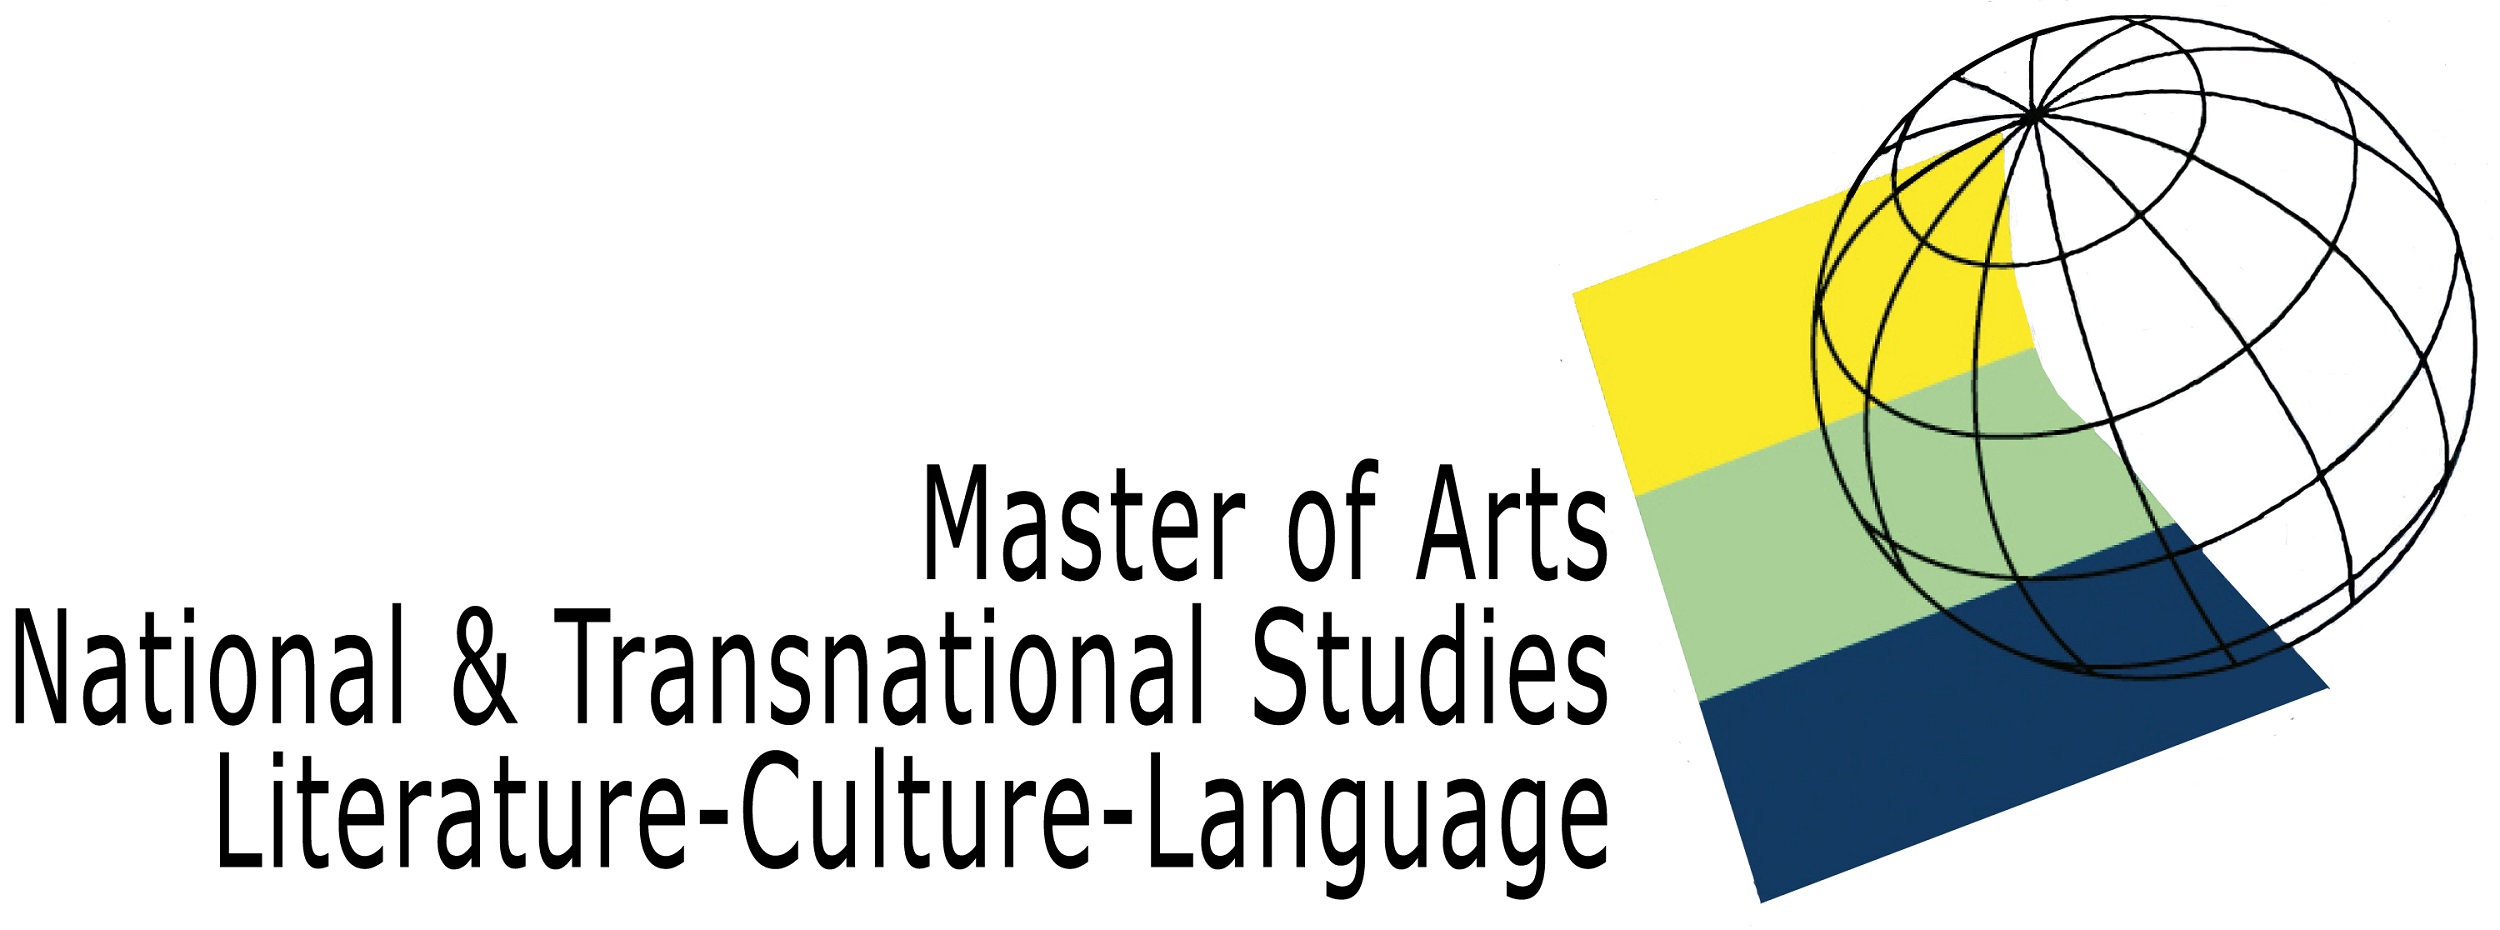 MA National and Transnational Studies: Literature - Culture - Language